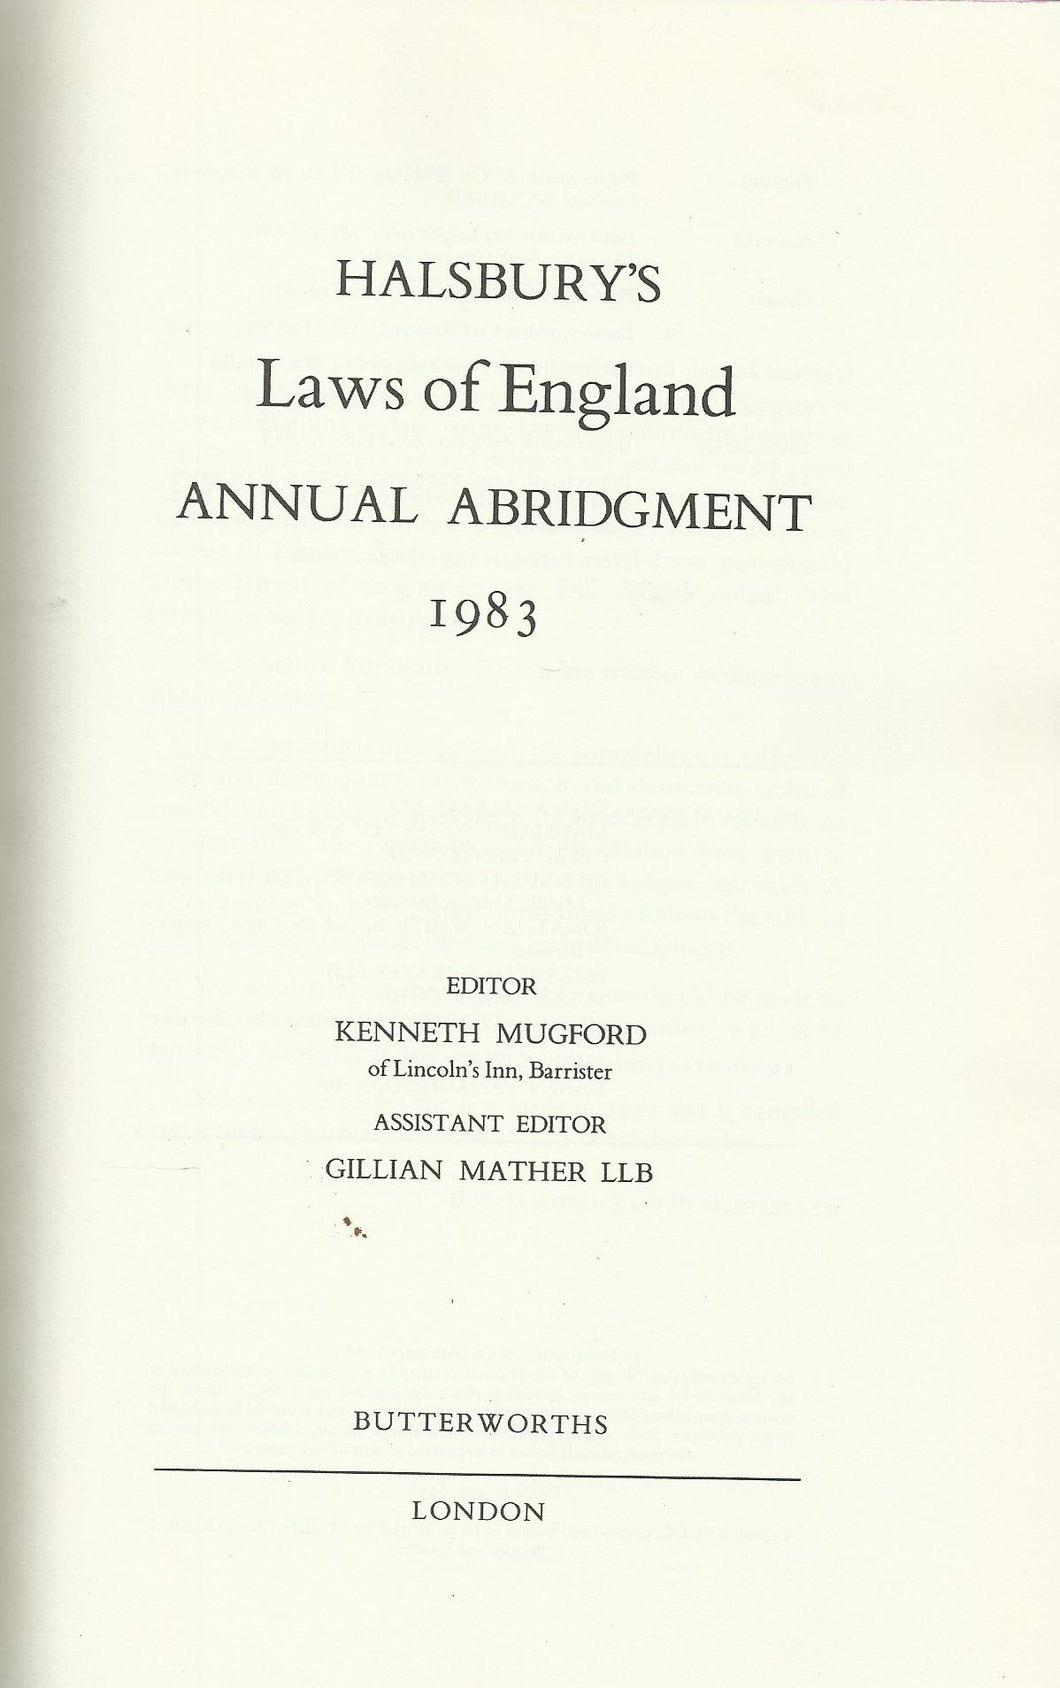 halsbury's laws of england annual abridgement 1983